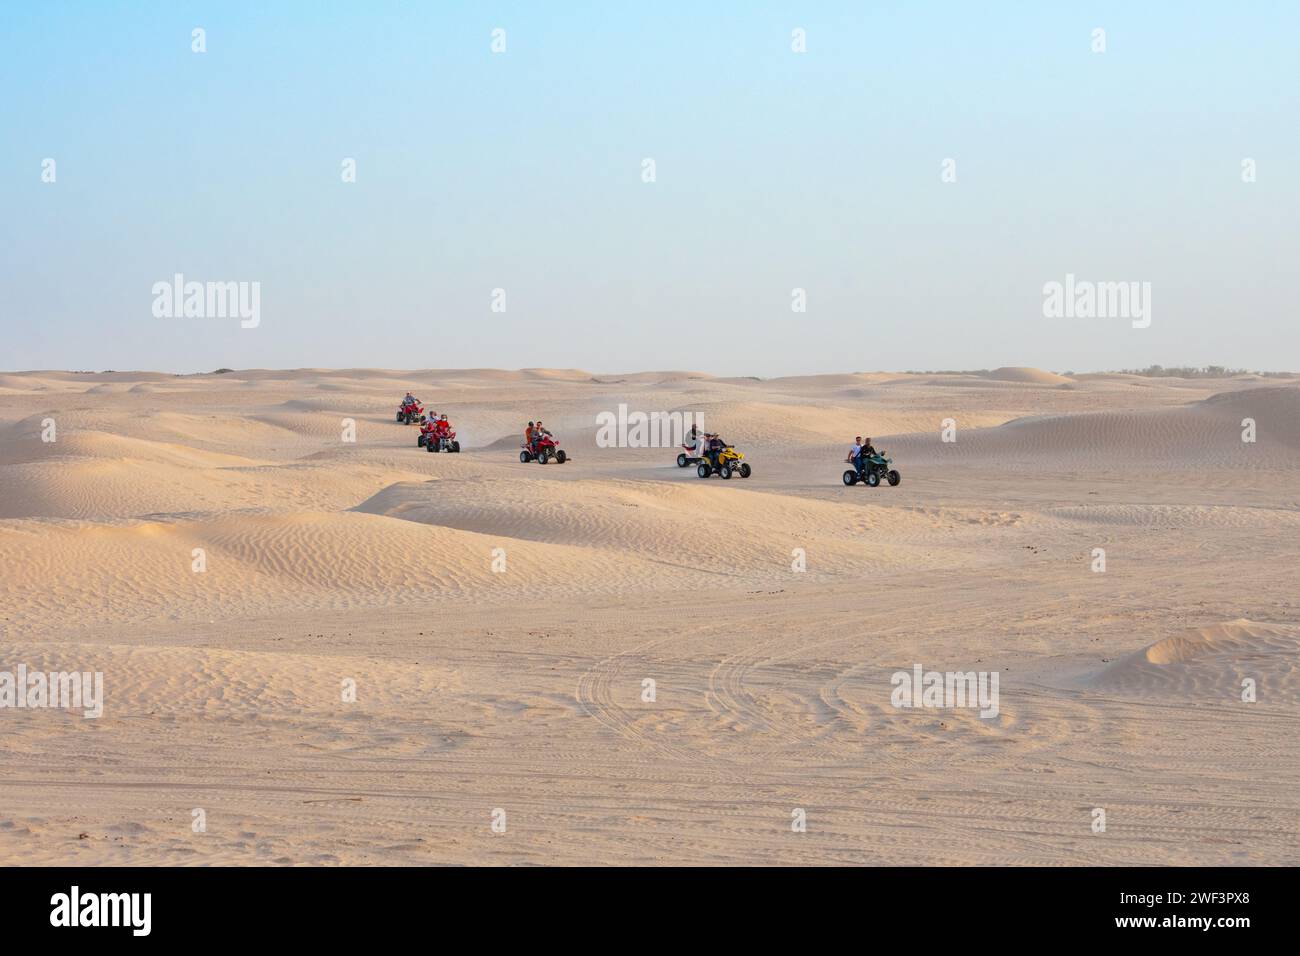 06.11.23 Sahara-Wüste, Tunesien: Quad-Bikes-Safari in der Sahara-Wüste, Tunesien. Leute, die in den Sanddünen Quad fahren Stockfoto